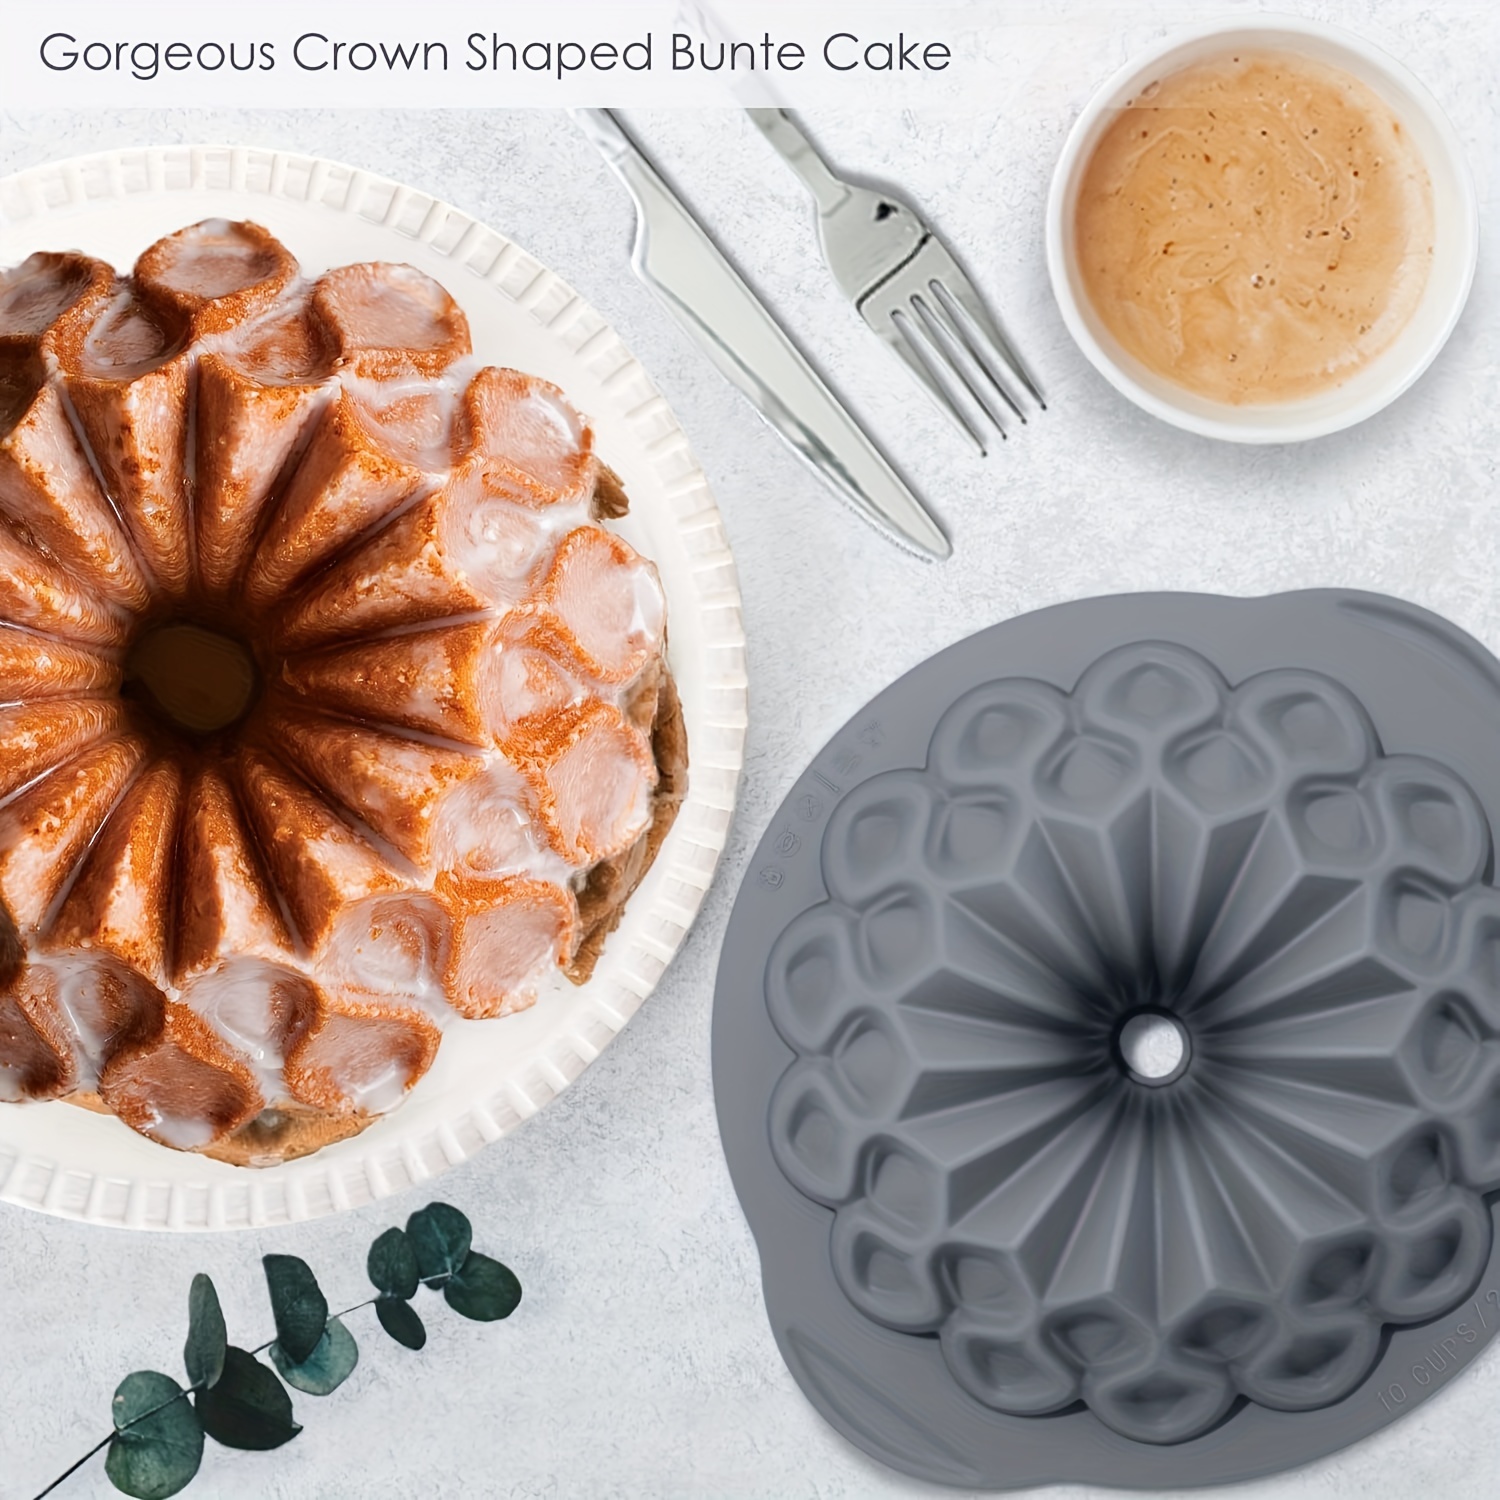 Silicone Bundt Cake Pan, Silicon Cake Molds For Baking,BPA Free,9